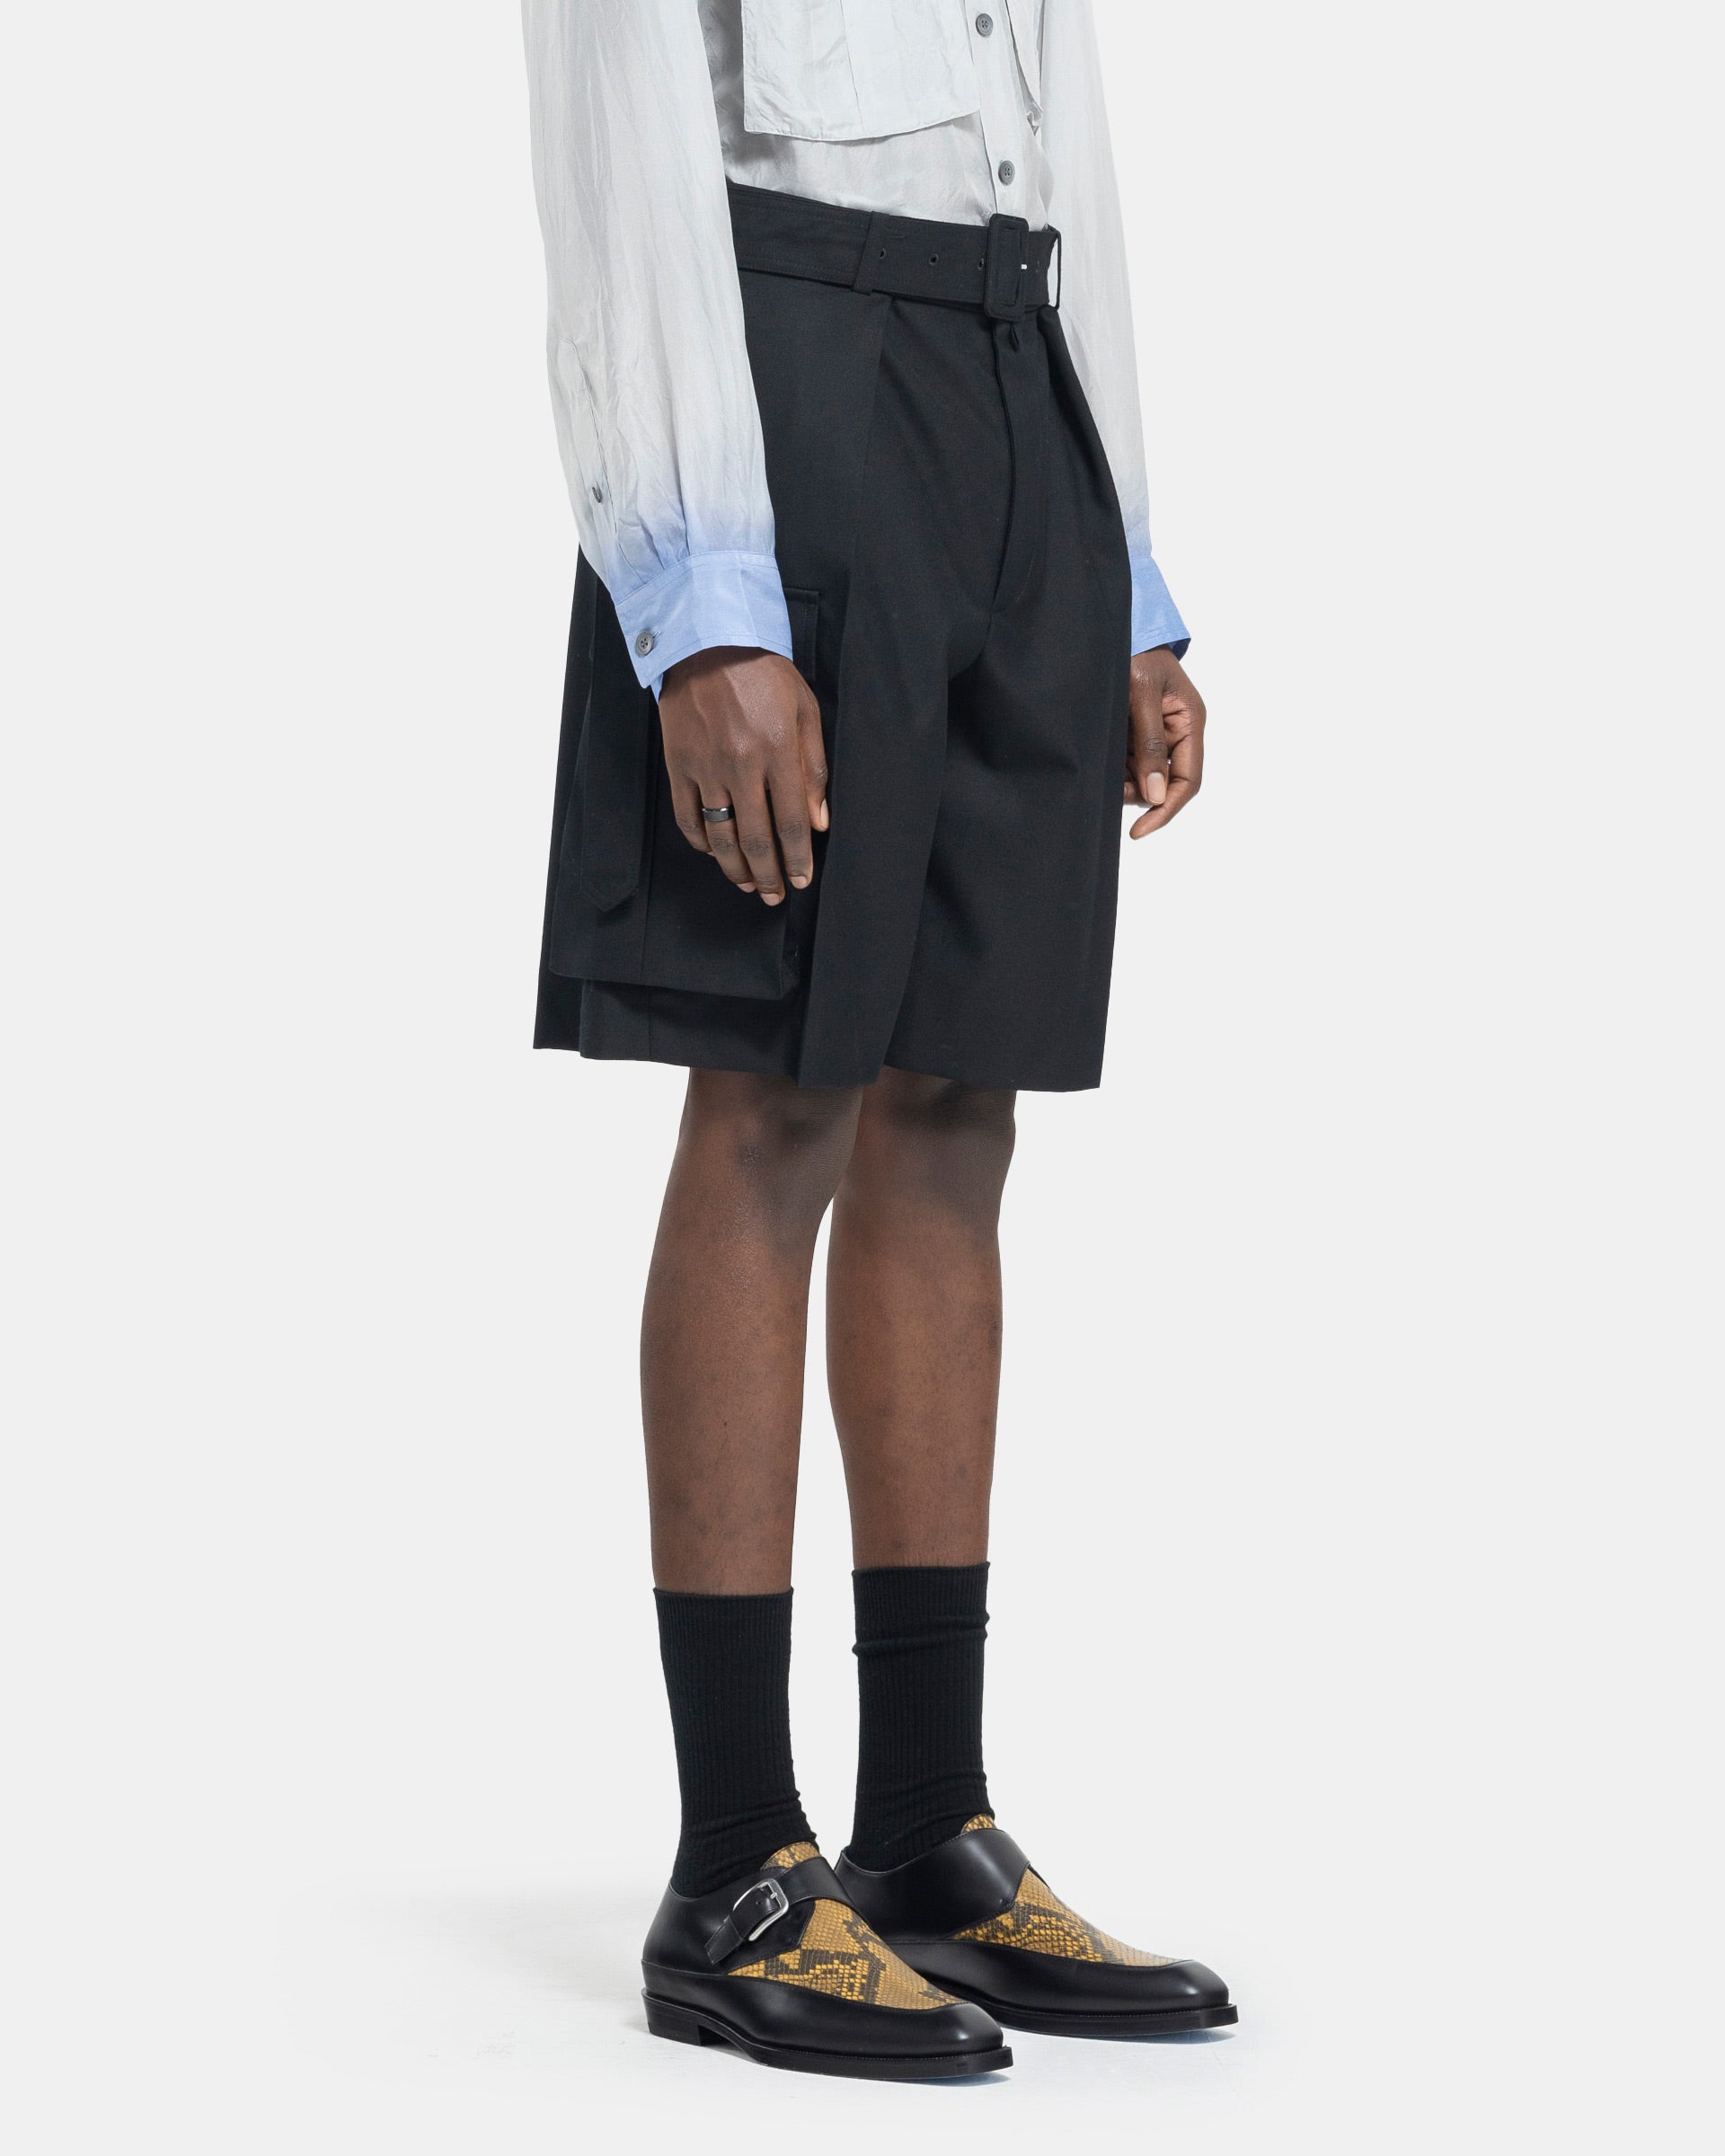 Model wearing Dries Van Noten Piers Bis Shorts in Black on white background